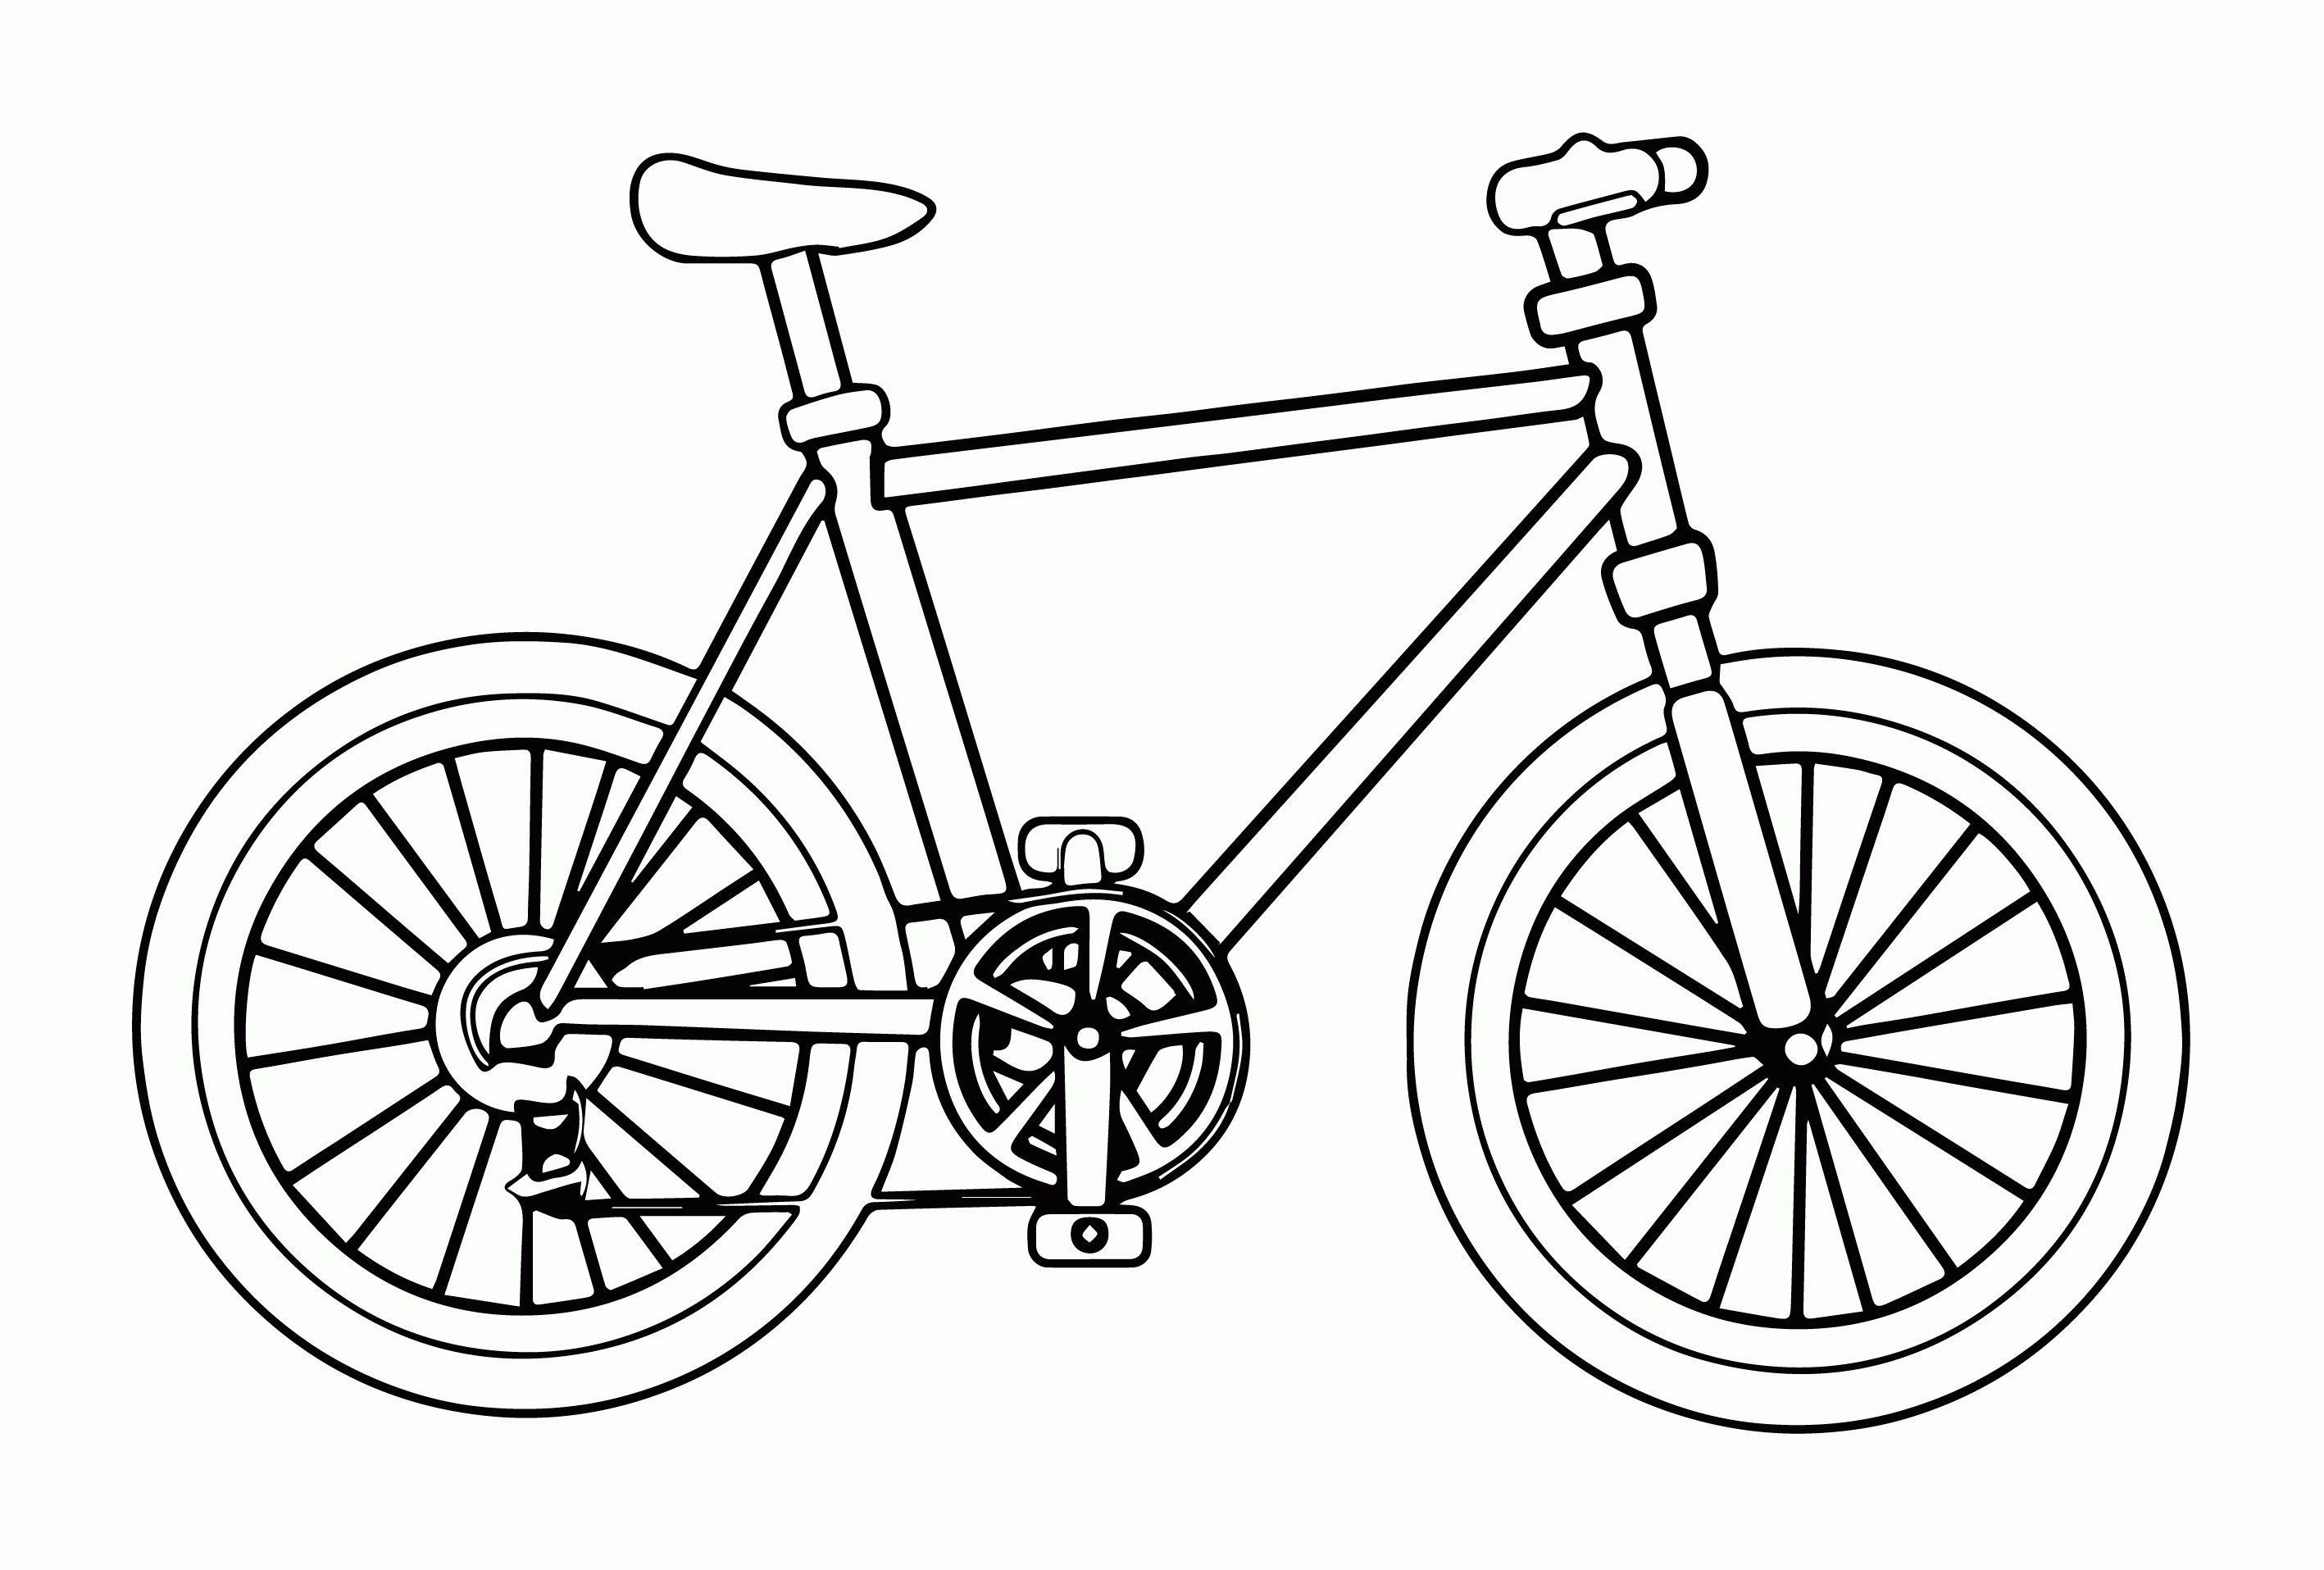 Bike Biycle Coloring Page 06 | Wecoloringpage